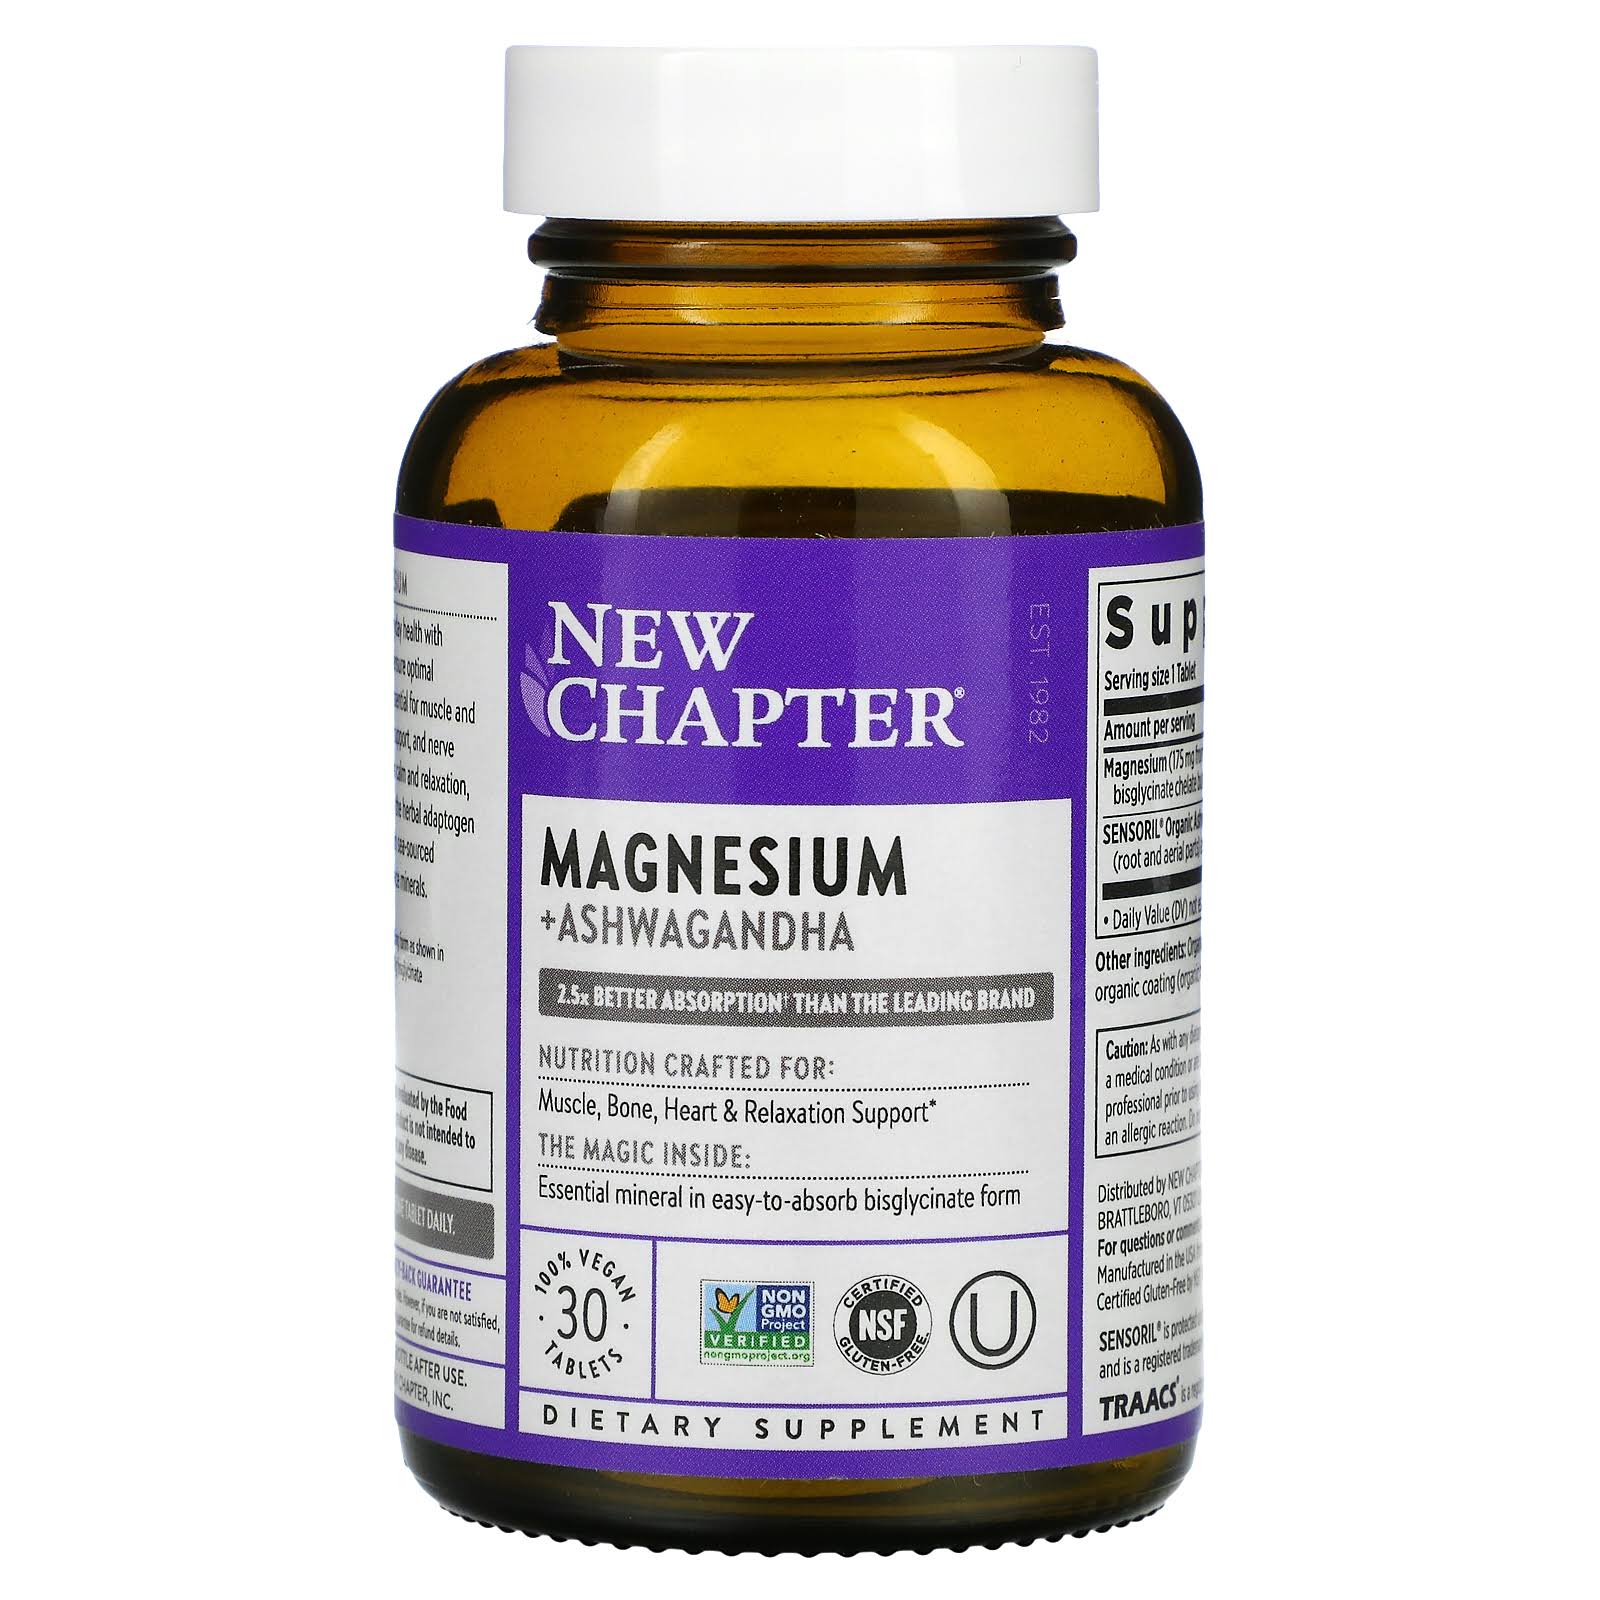 Magnesium, New Chapter Magnesium + Ashwagandha Supplement, 2.5X